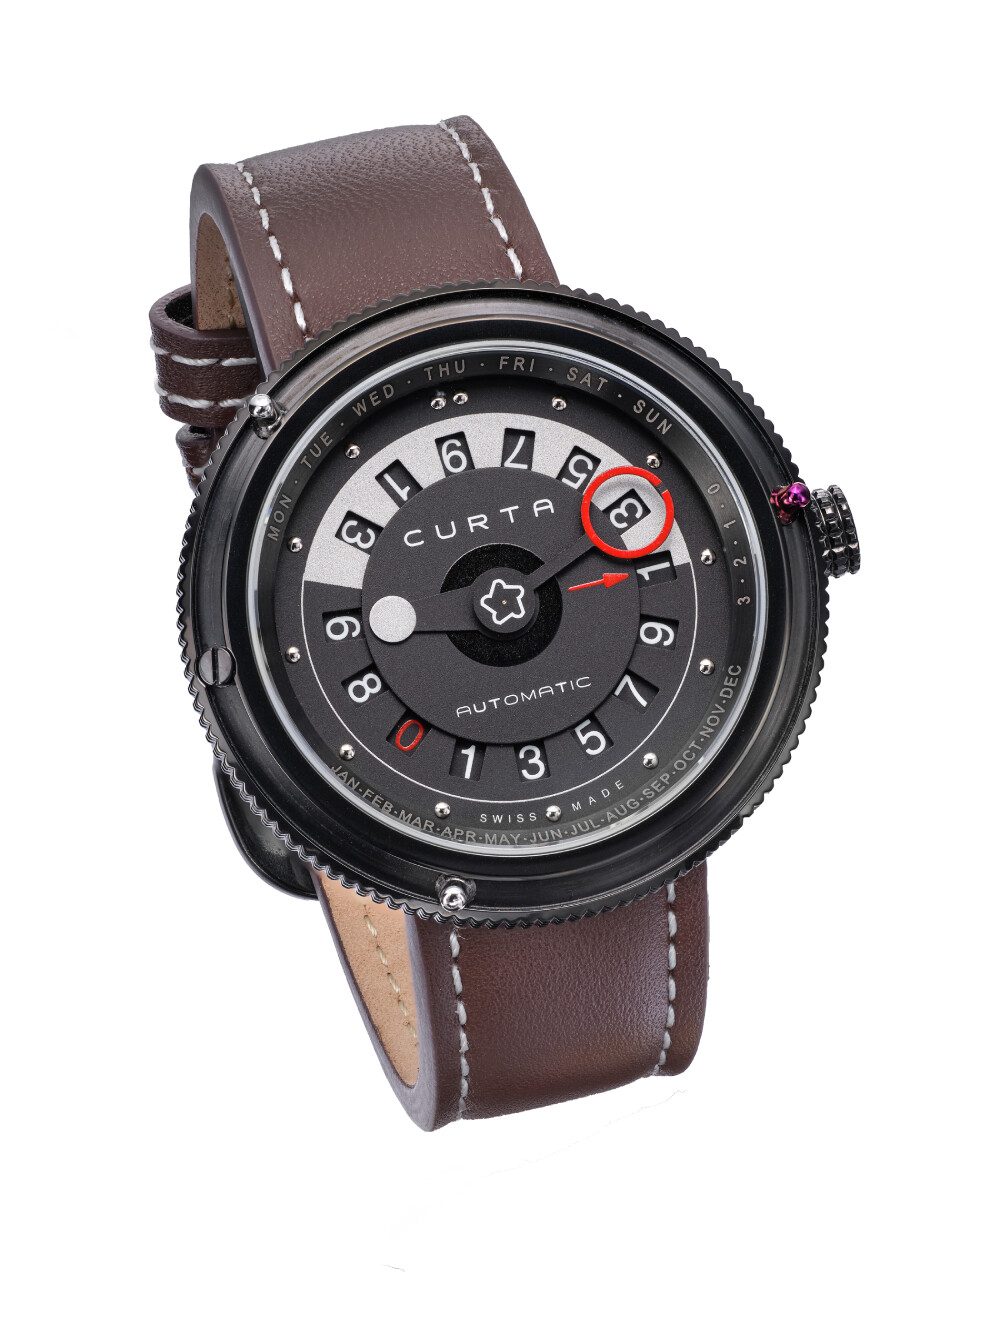 «CURTA Kalender» in black, automatic watch, swiss made